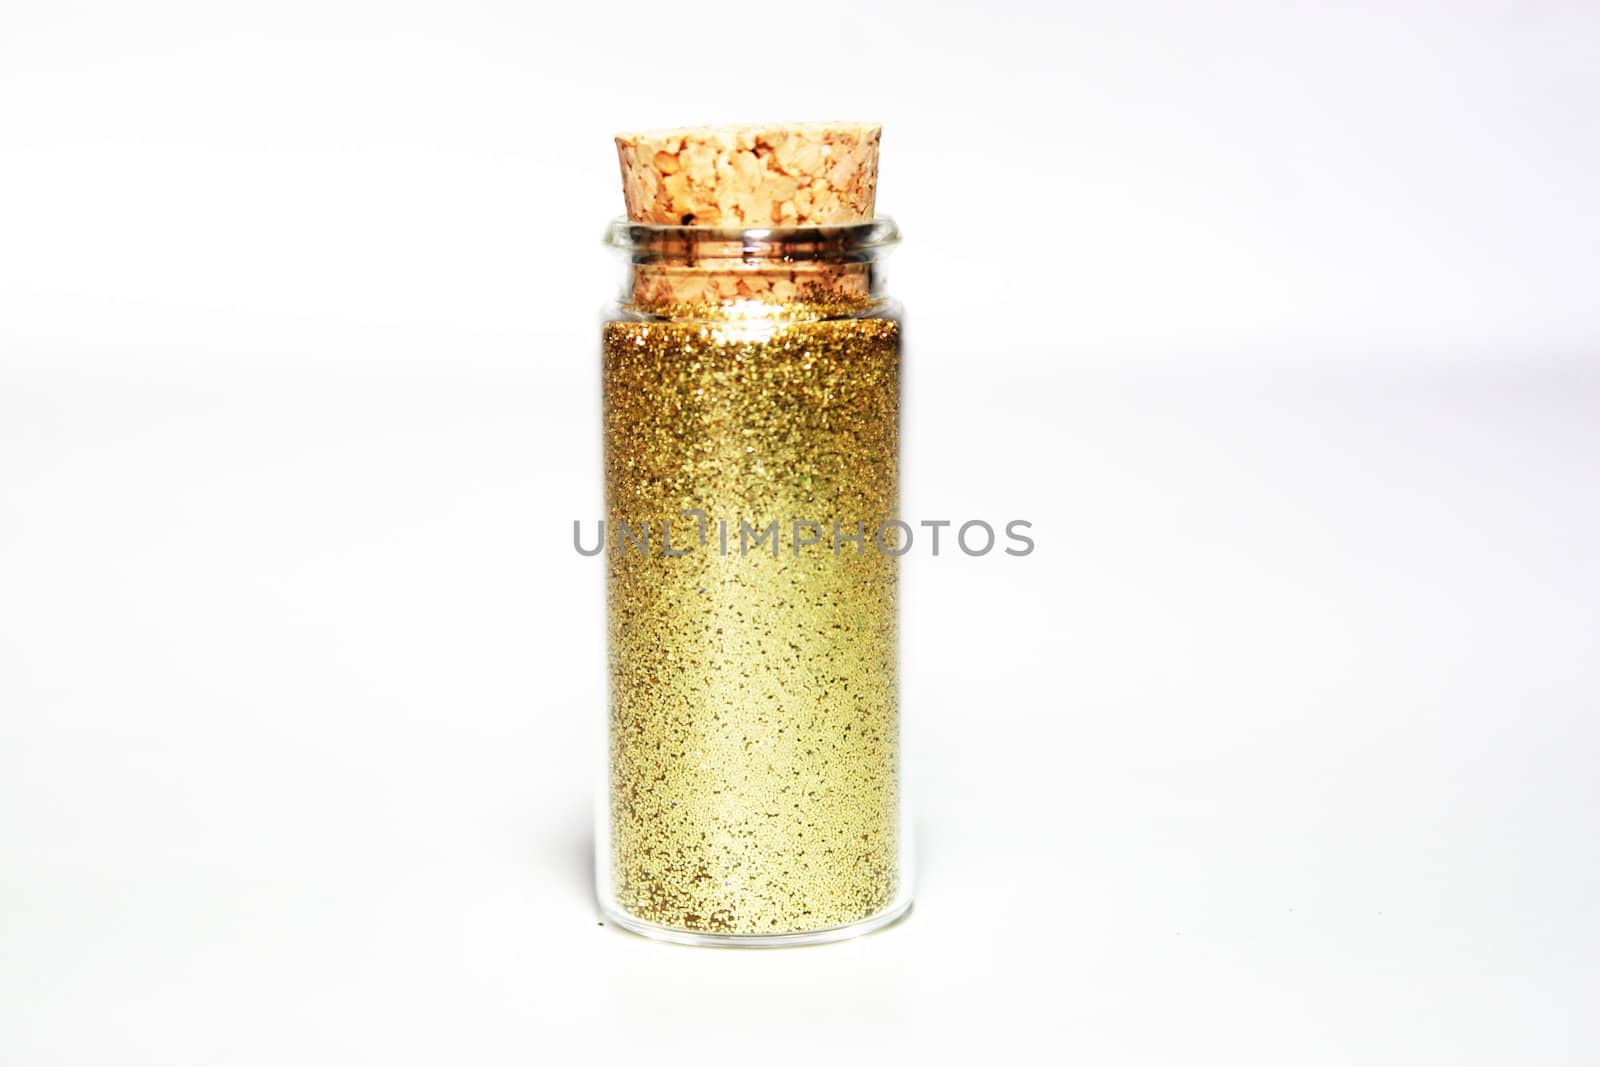 Gold glitter powder in a glass small bottle